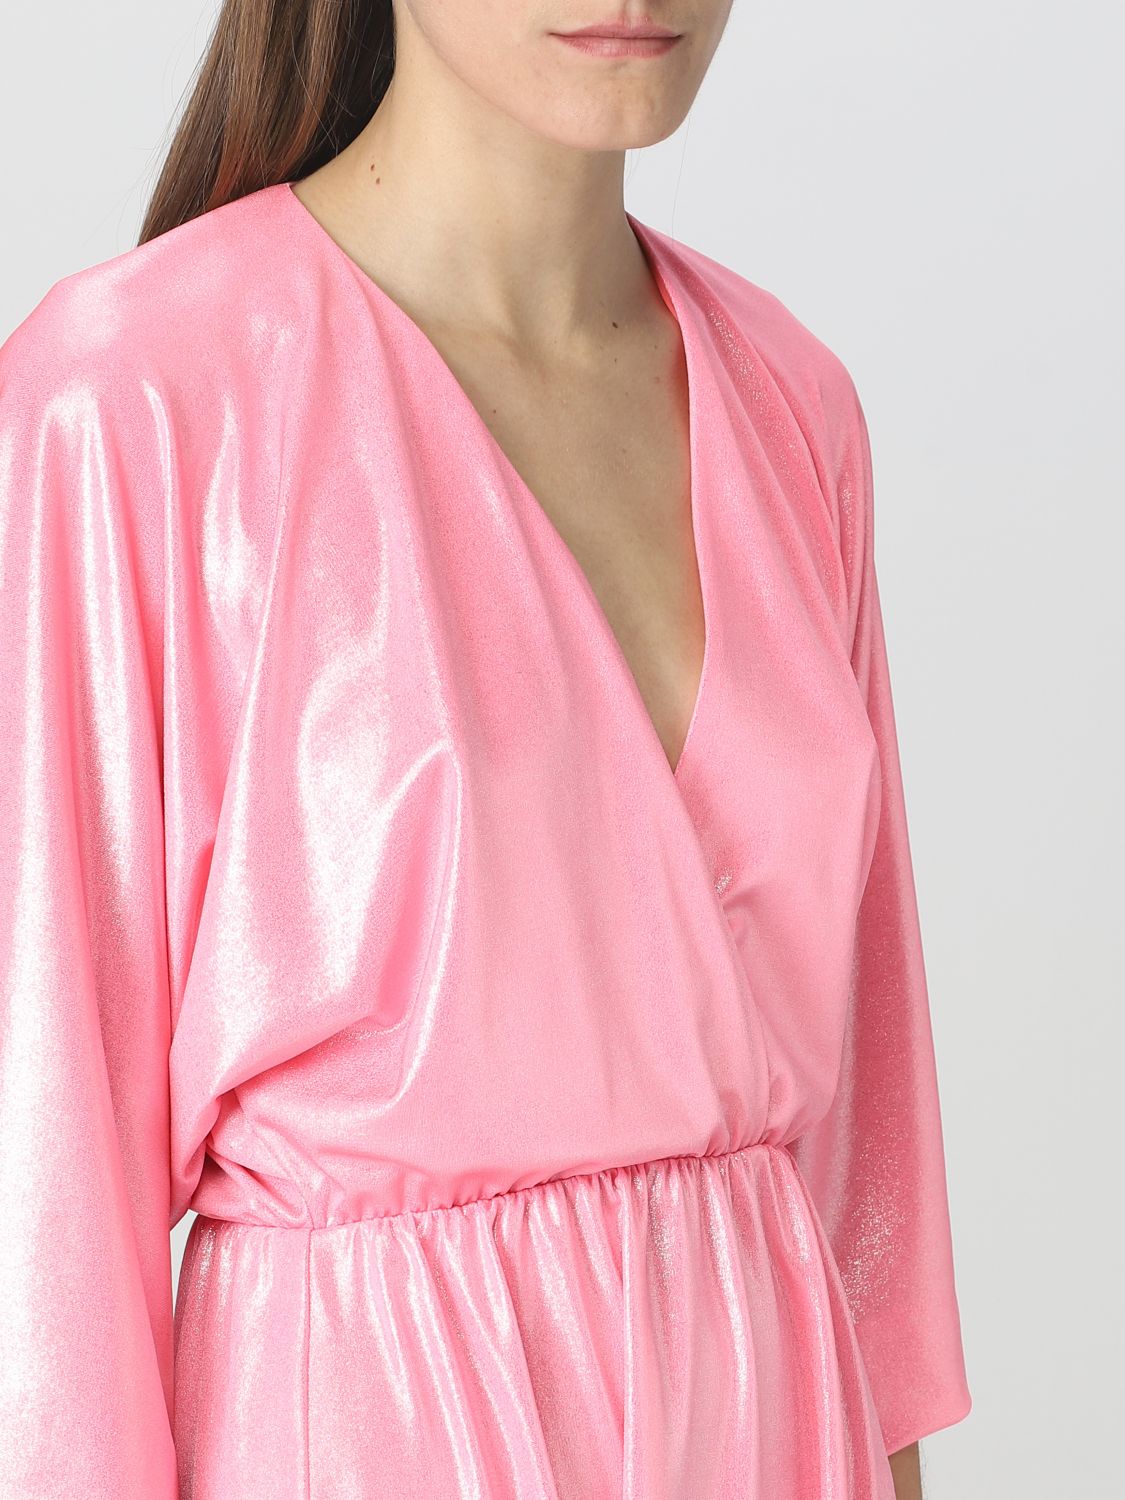 Vestido Aniye By: Vestido Aniye By para mujer rosa 3